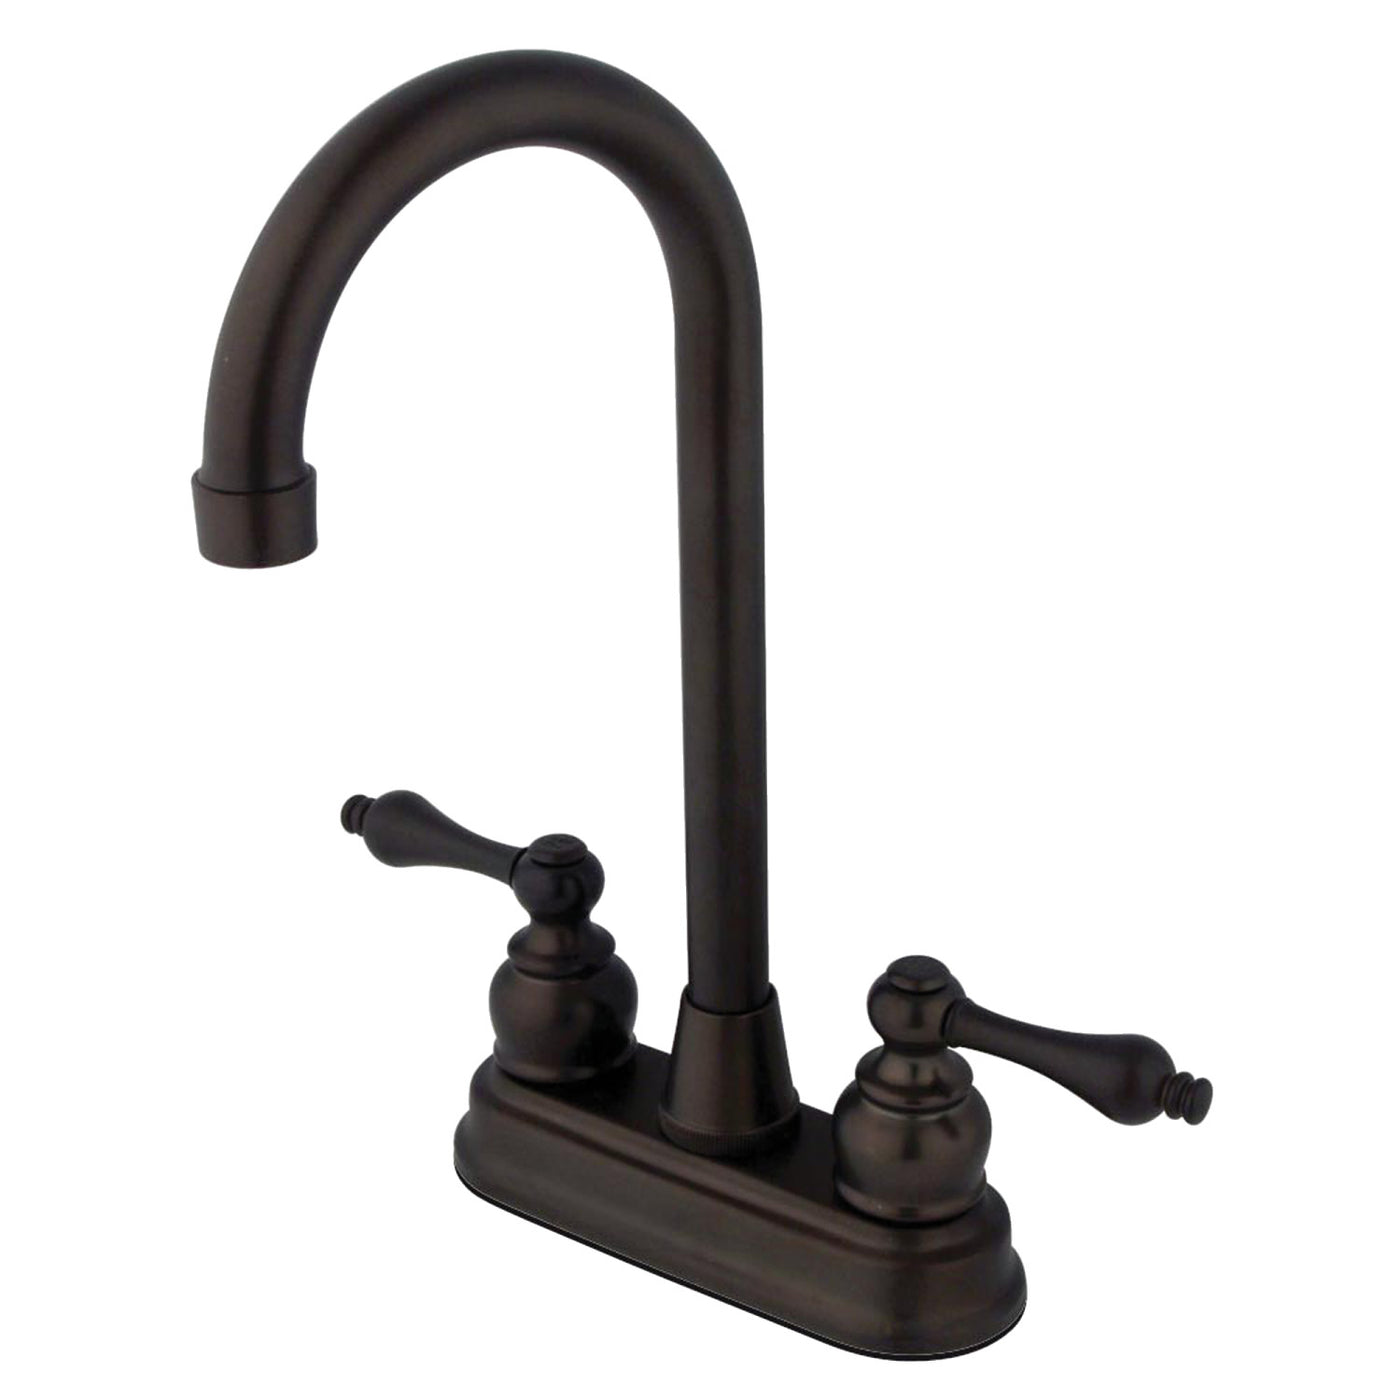 Elements of Design EB495AL 4-Inch Centerset High-Arc Bar Faucet, Oil Rubbed Bronze